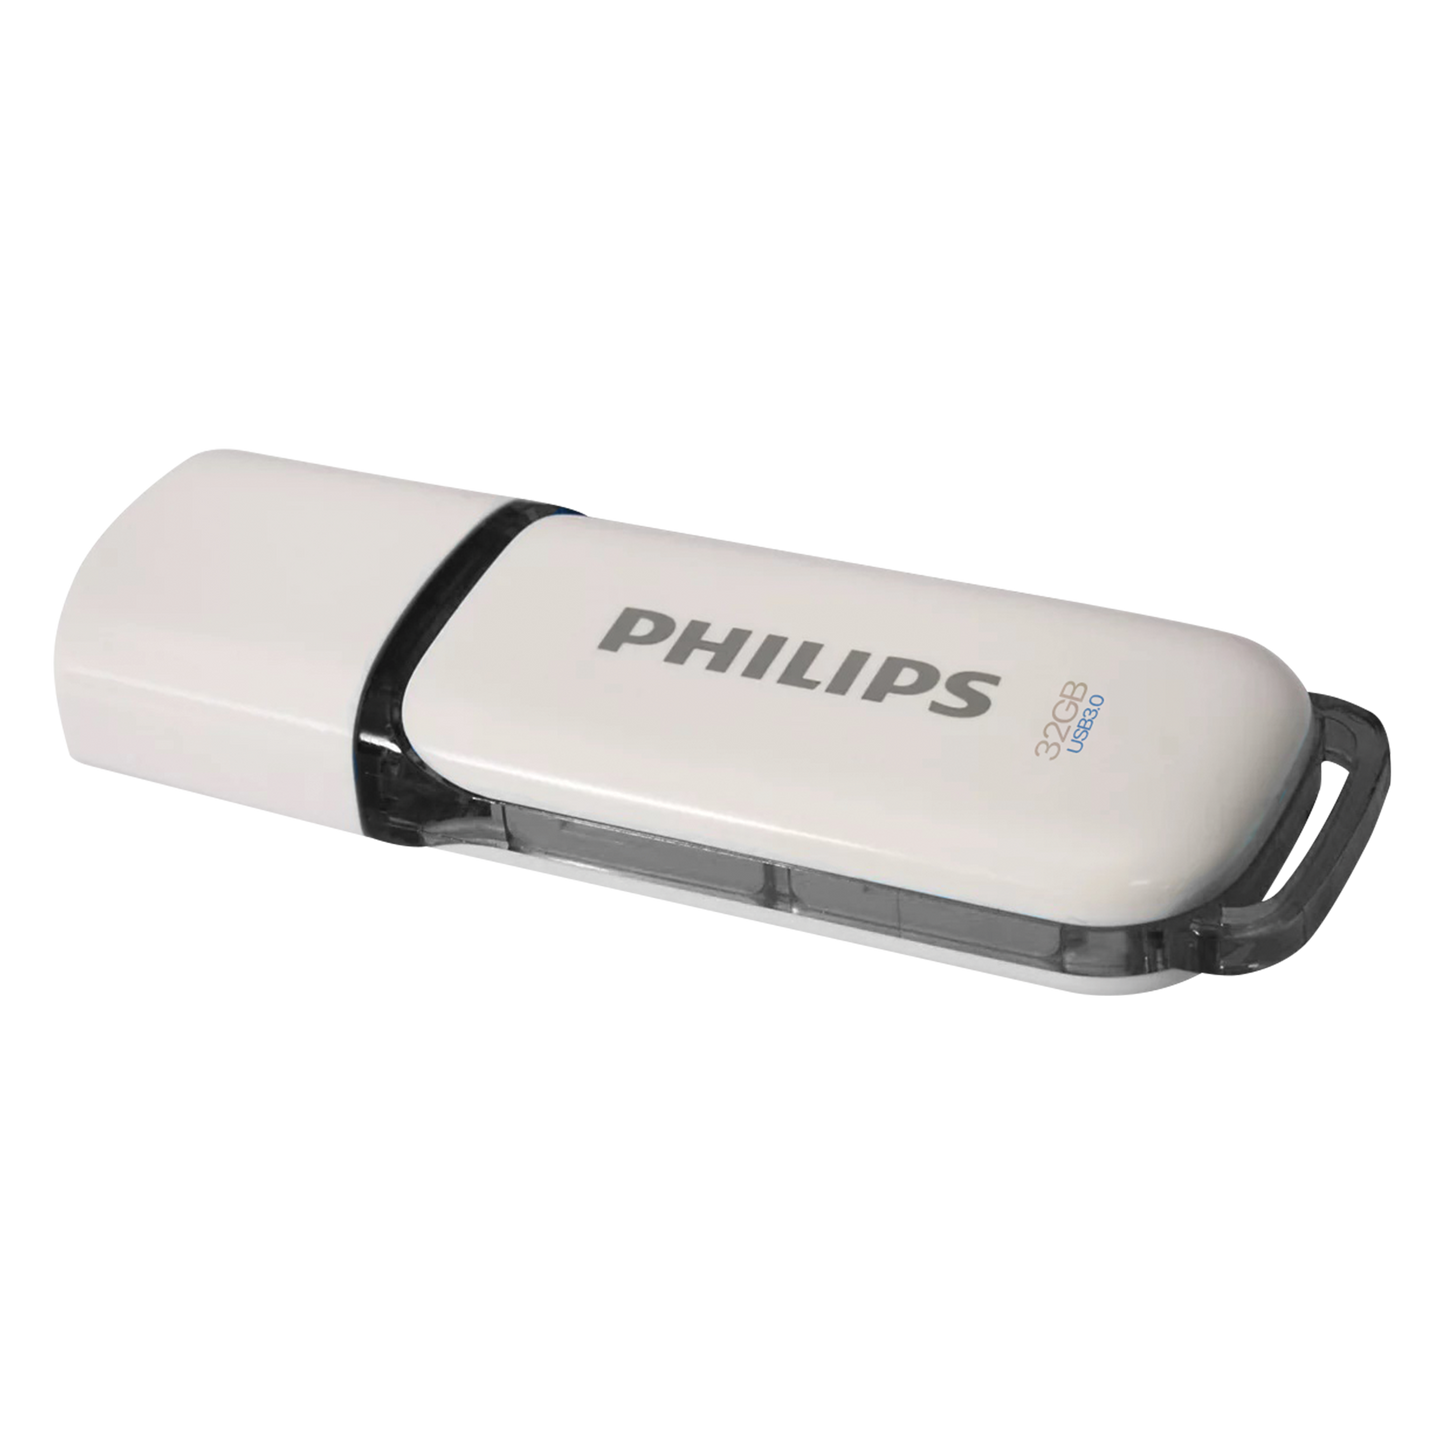 Philips Snow Flash Drive 3.0